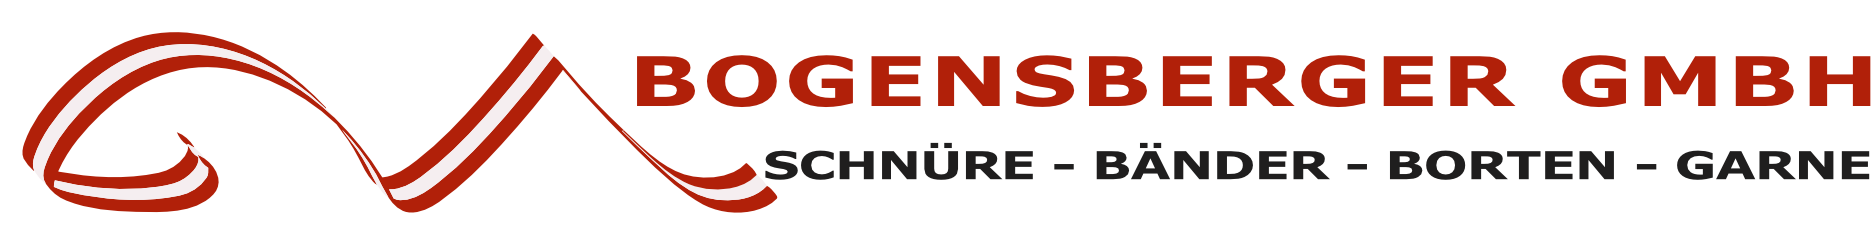 Bogensberger GmbH